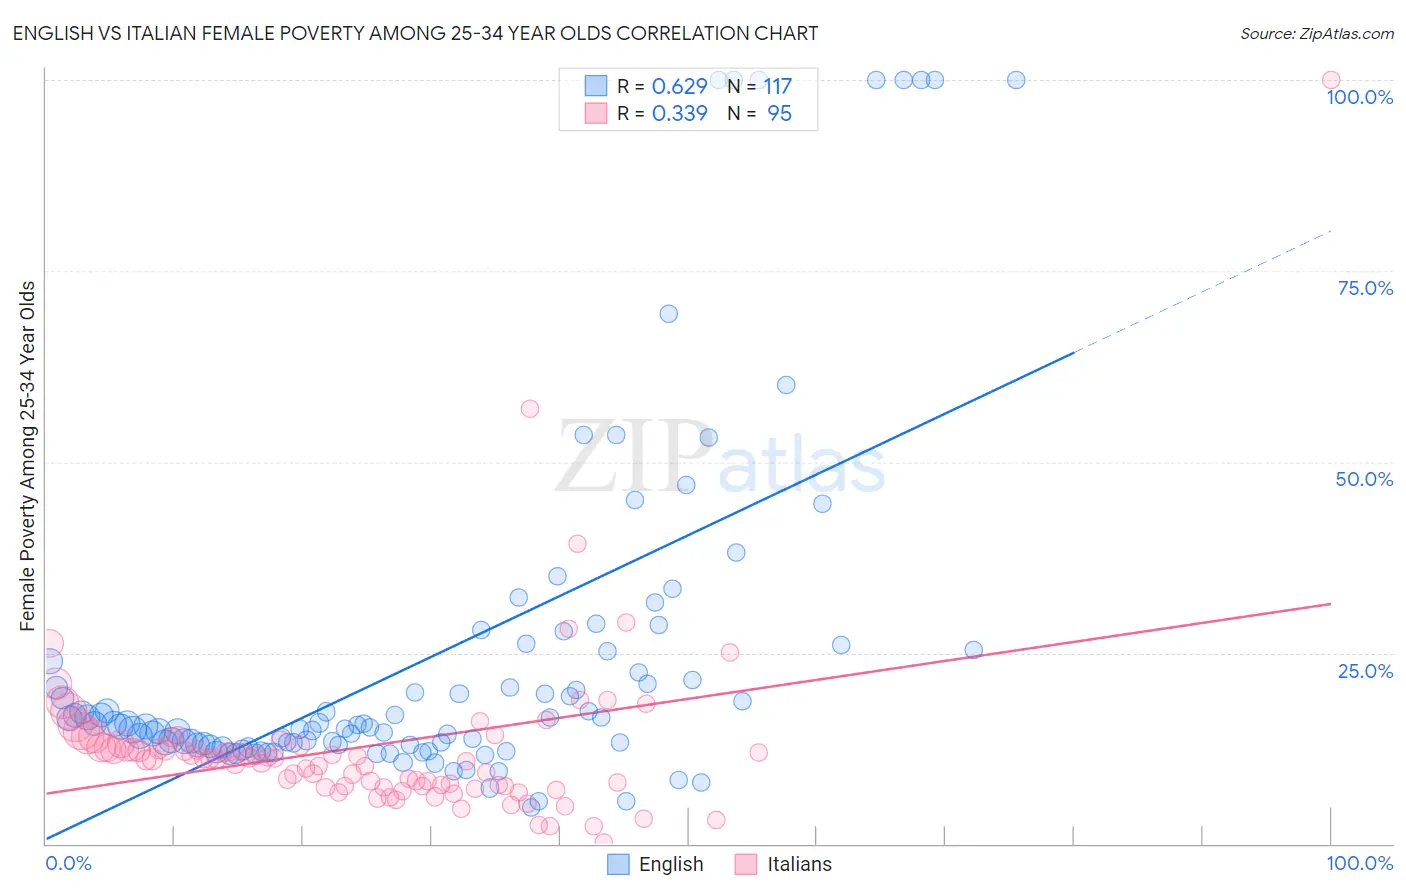 English vs Italian Female Poverty Among 25-34 Year Olds